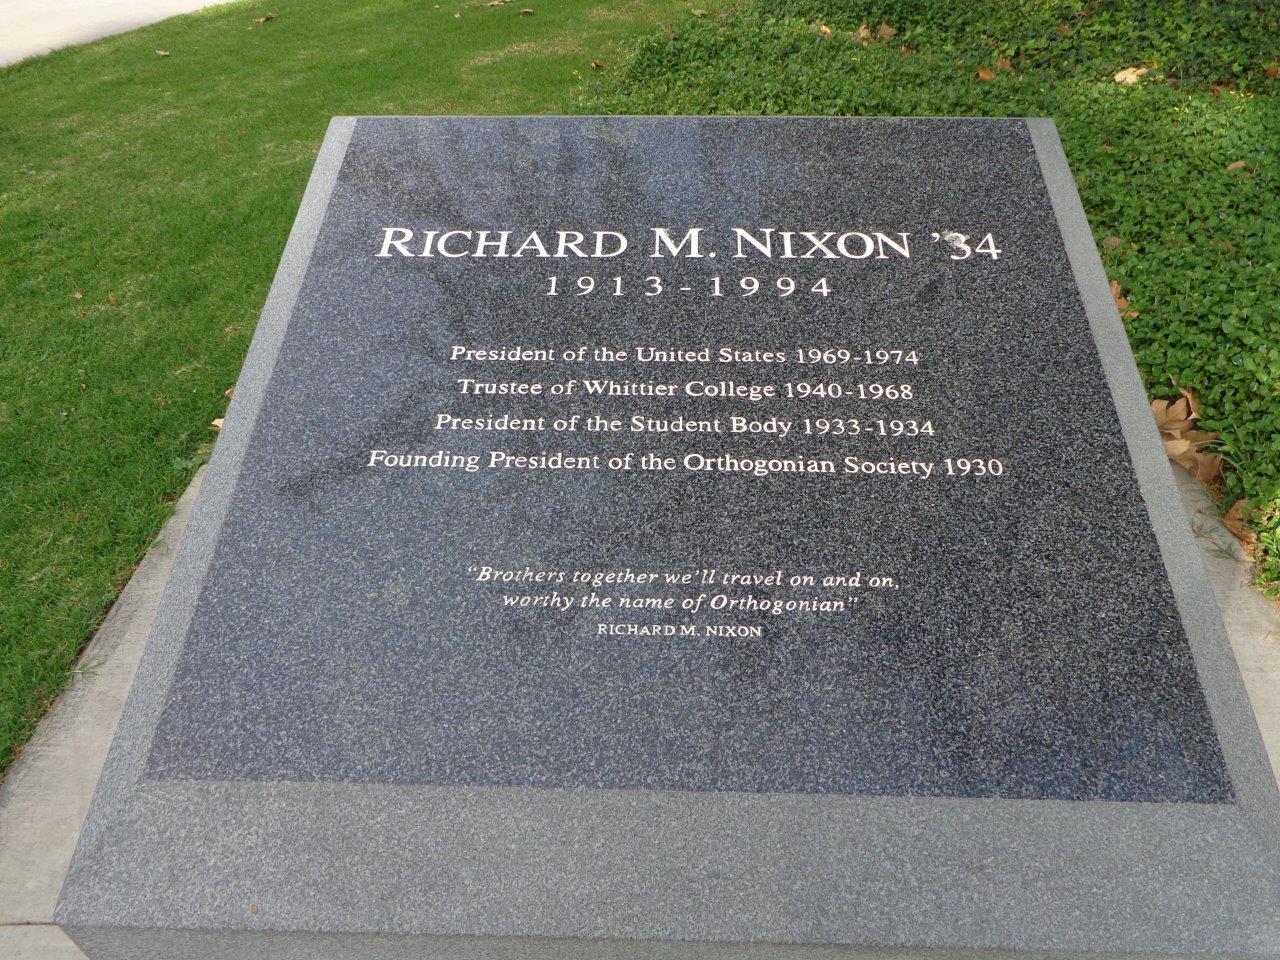 Nixon monument at Whittier College